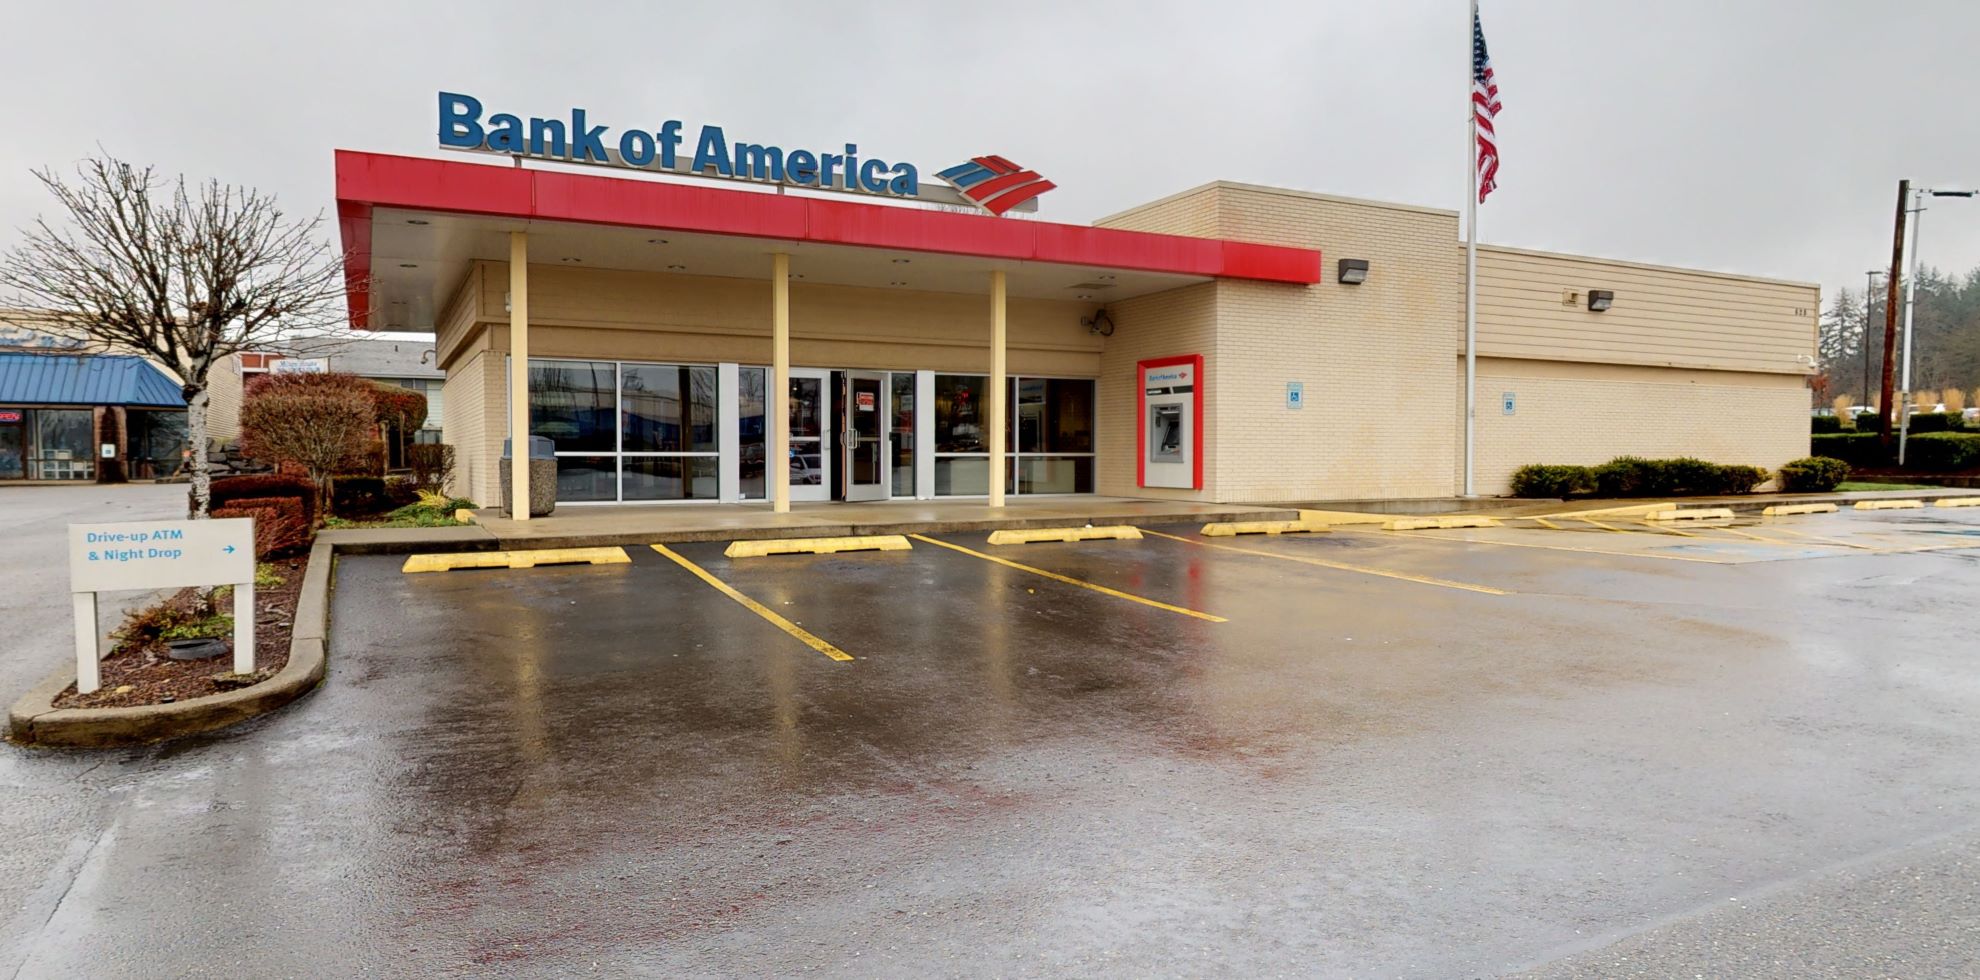 Bank of America financial center with drive-thru ATM | 628 Meridian E, Milton, WA 98354